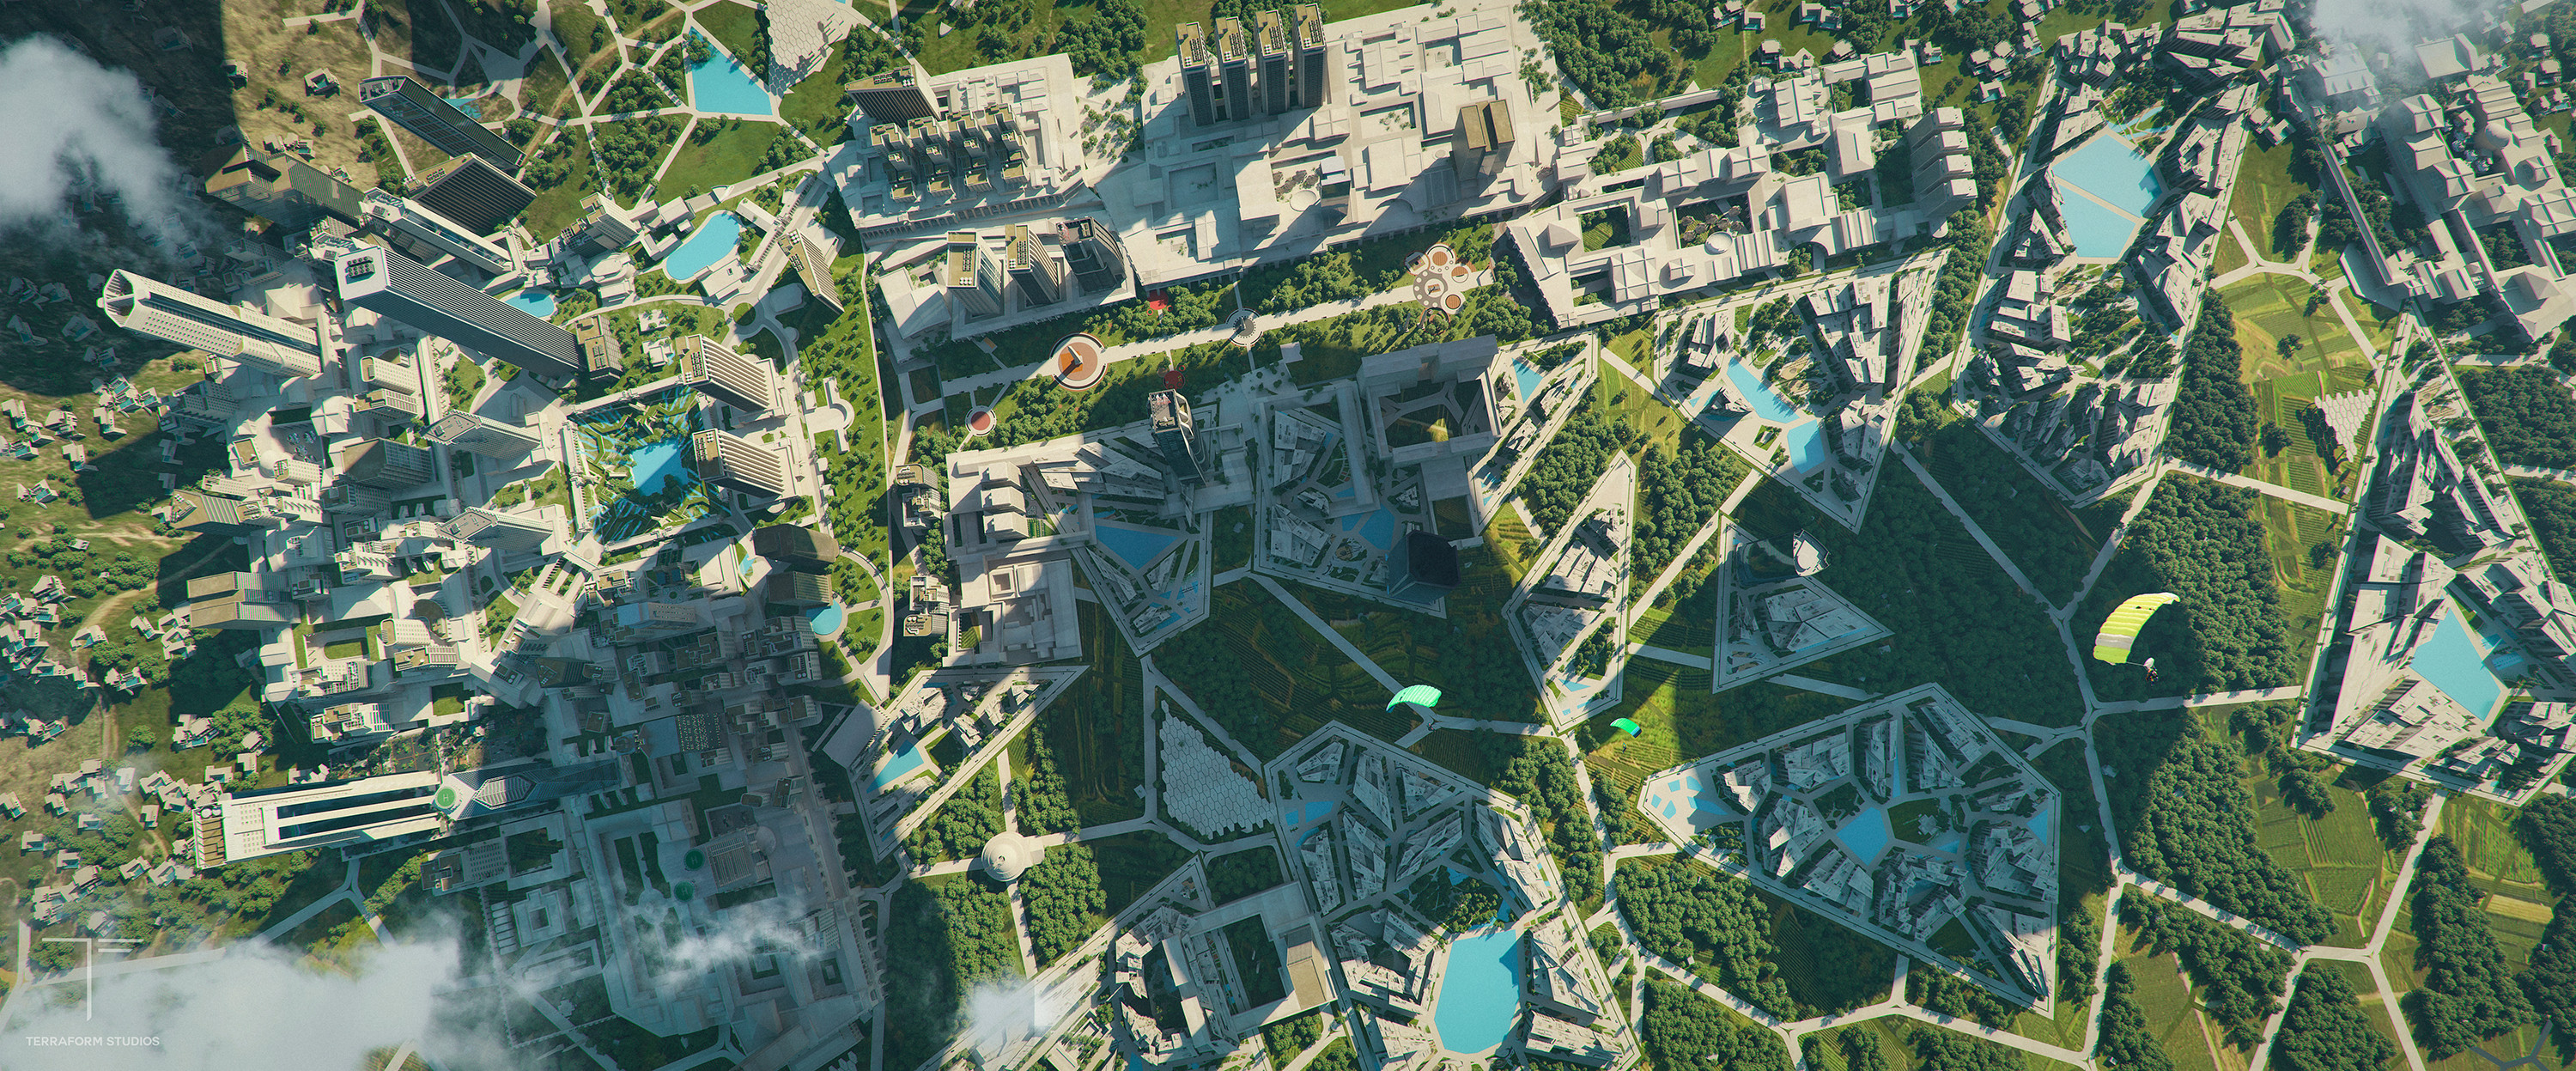 General 3000x1247 cityscape aerial view digital art artwork landscape